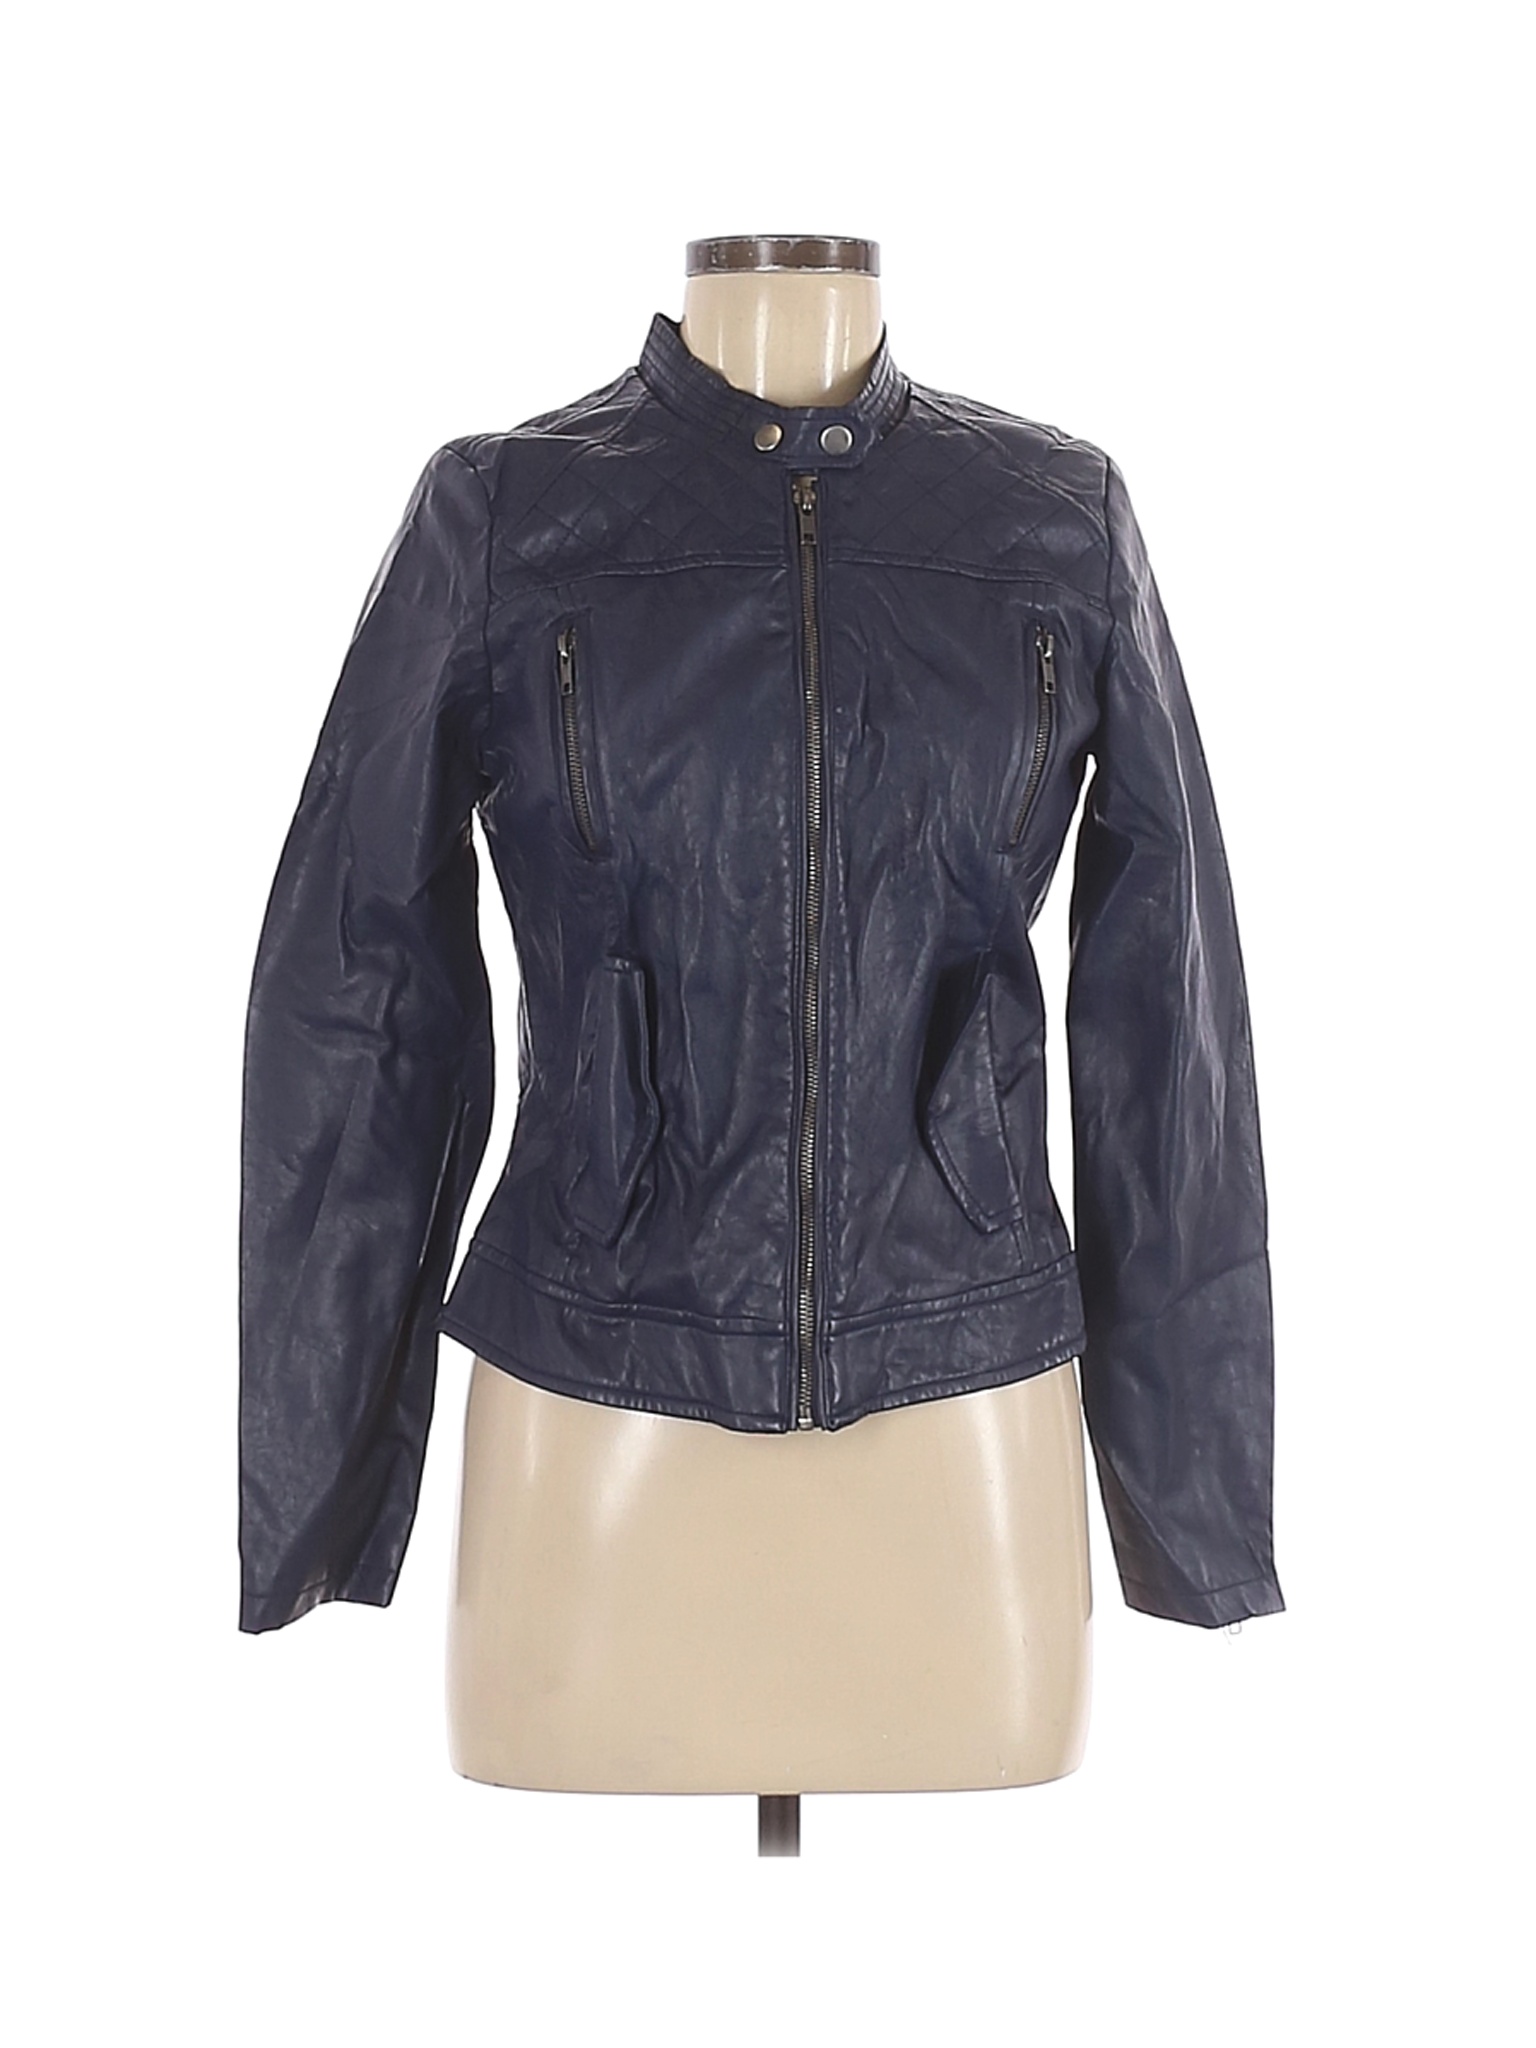 Assorted Brands Women Blue Faux Leather Jacket M | eBay